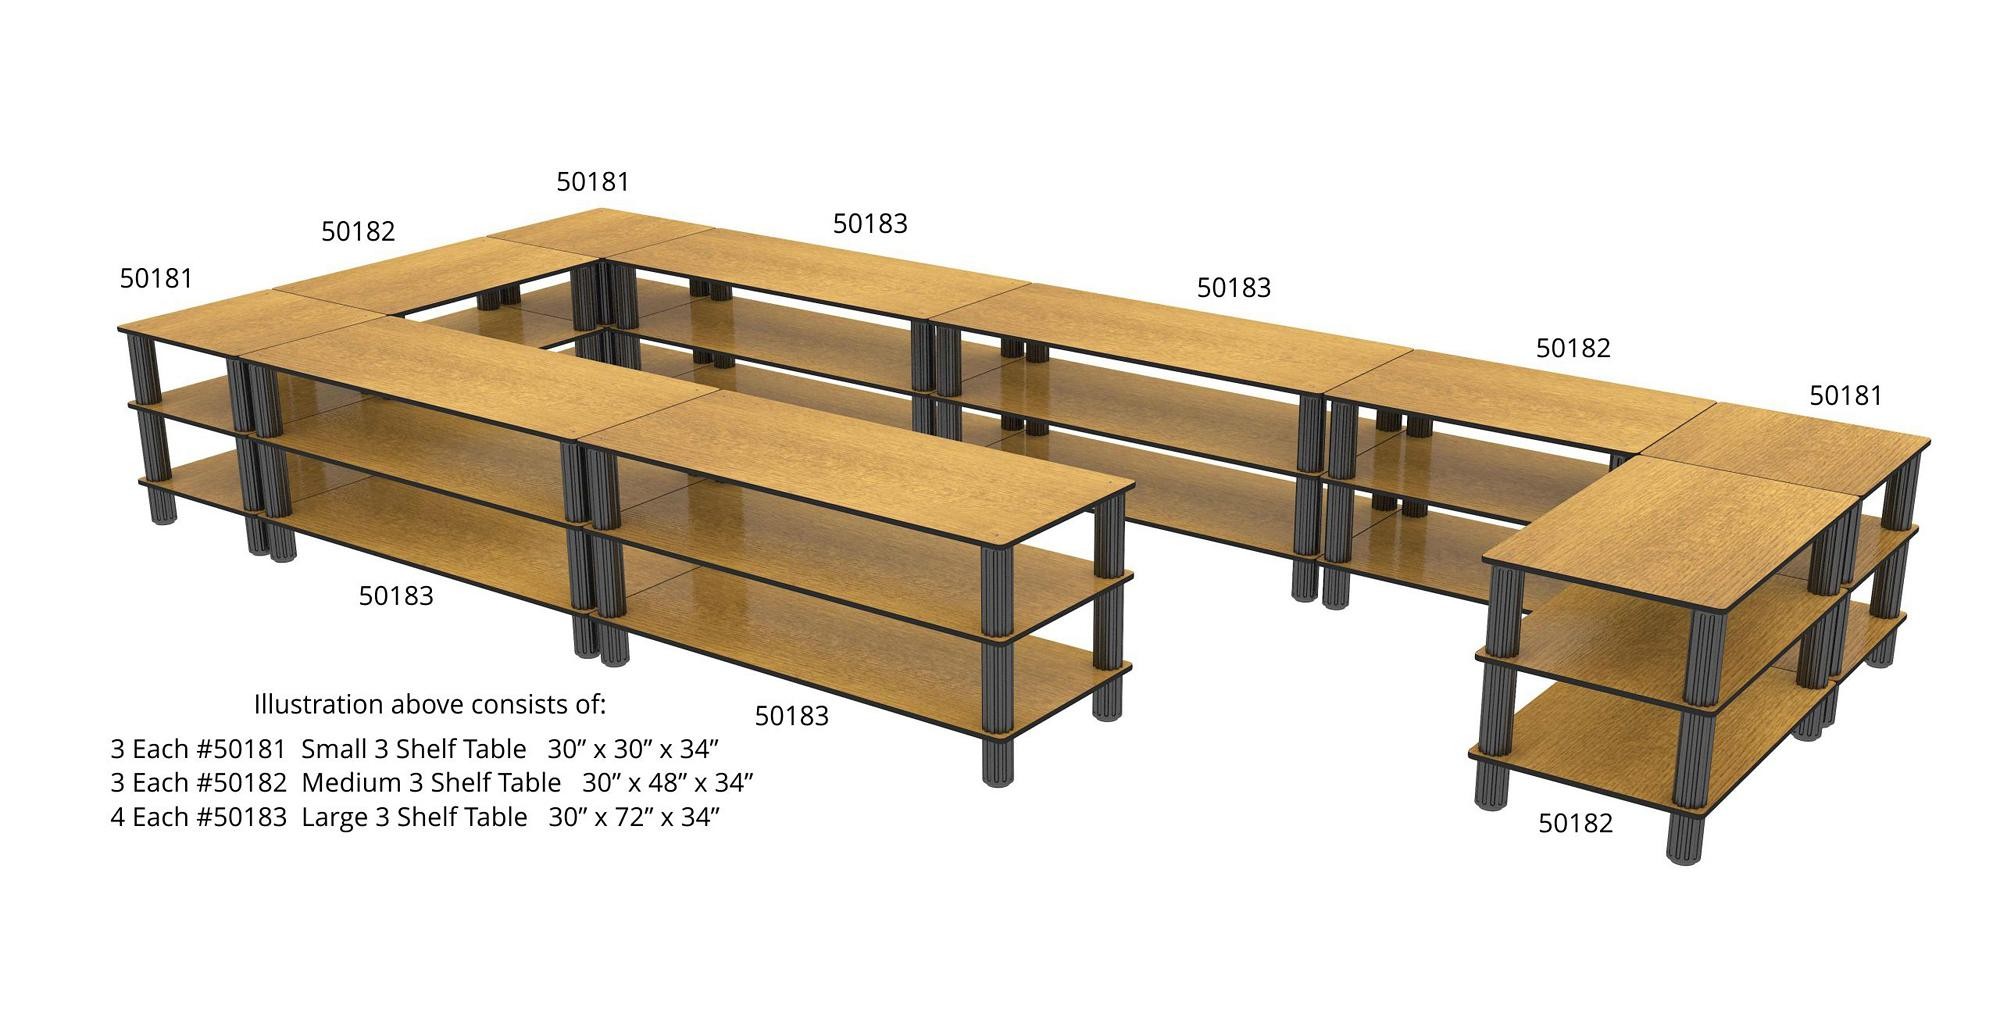 Bon Chef 50182WVWALNUT Medium 3-Shelf Flex Table with Walnut Finish, 30" x 48" x 34"